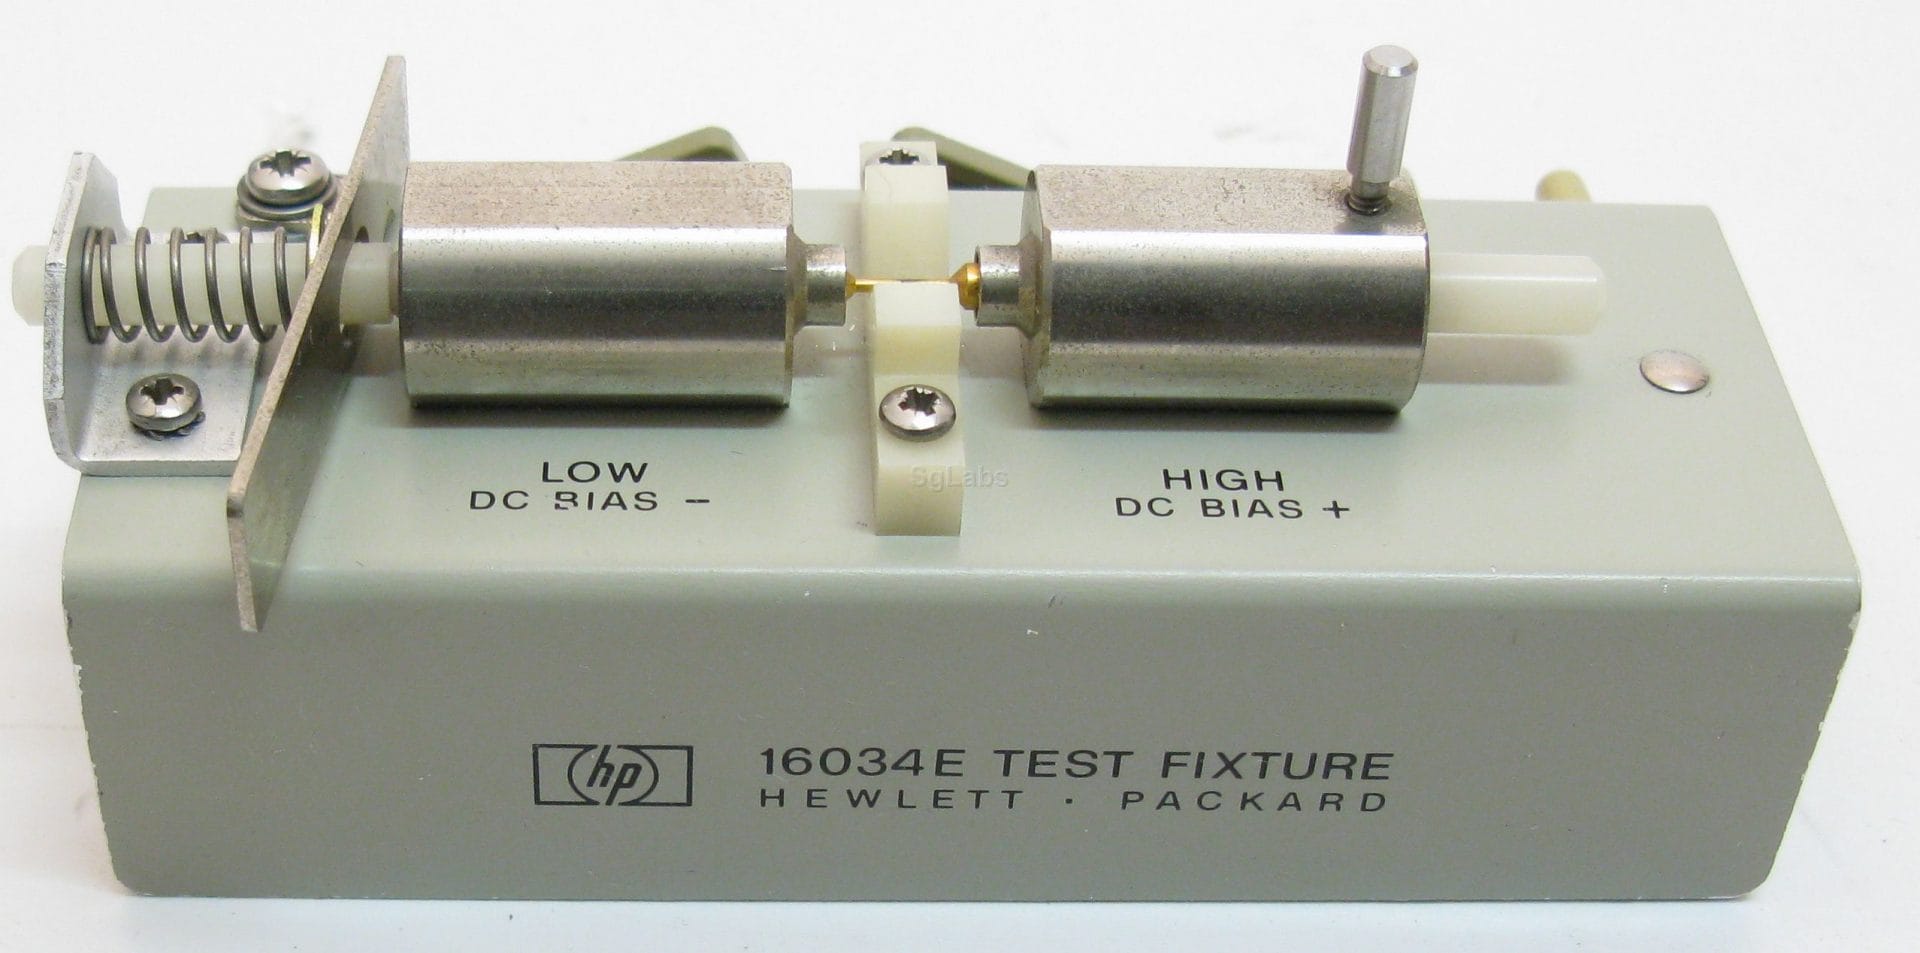 Keysight 16034E Test Fixture